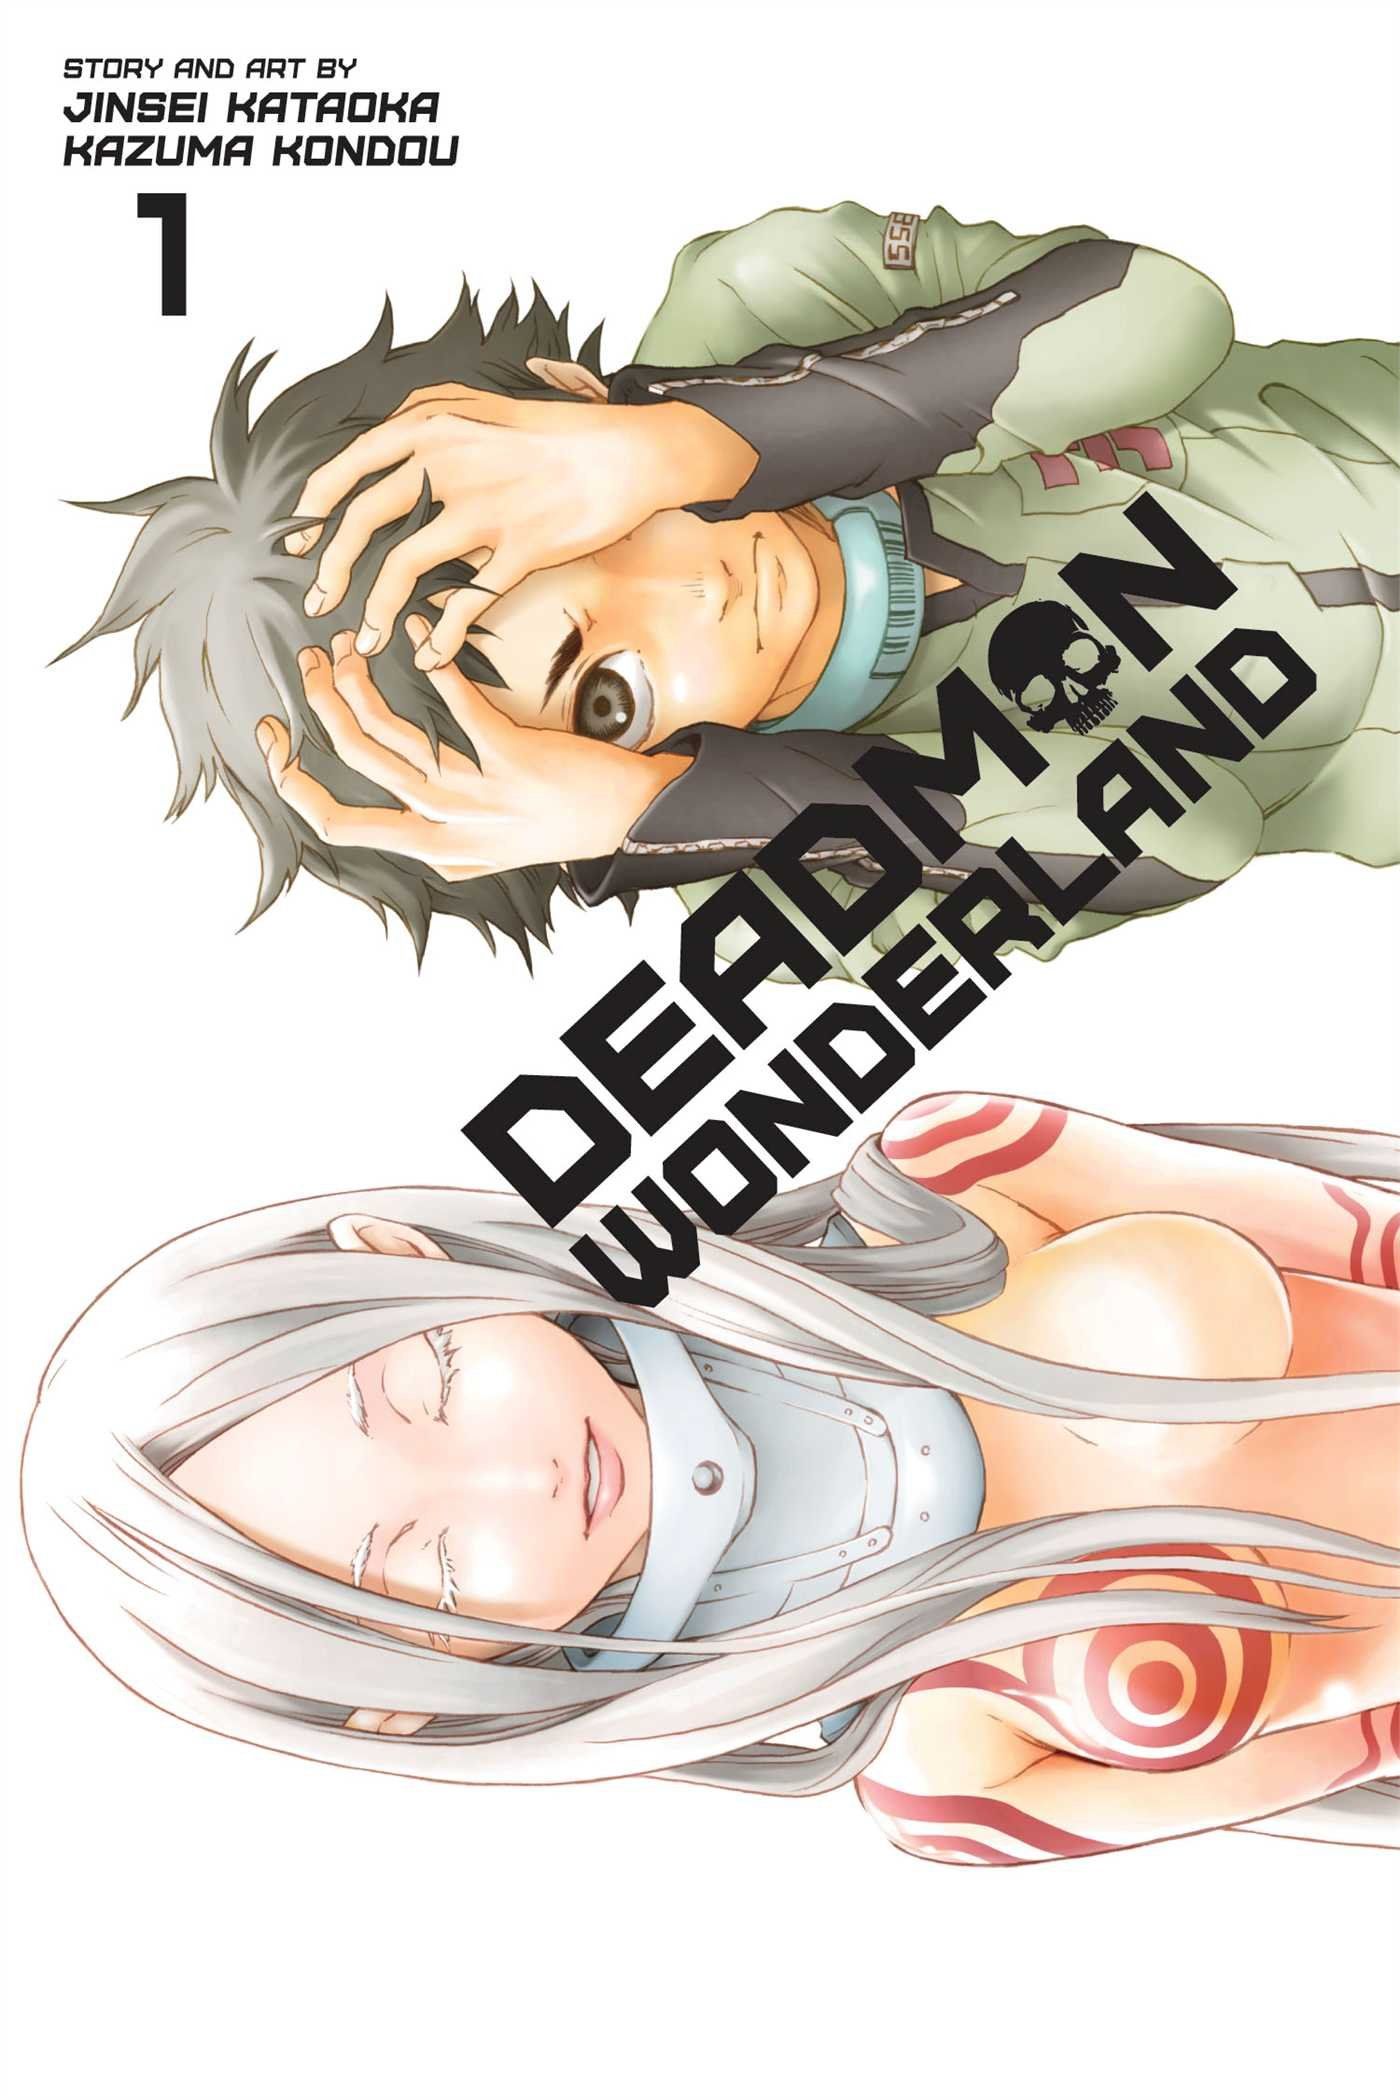 Deadman Wonderland by Jinsei Kataoka and Kazuma Kondou cover